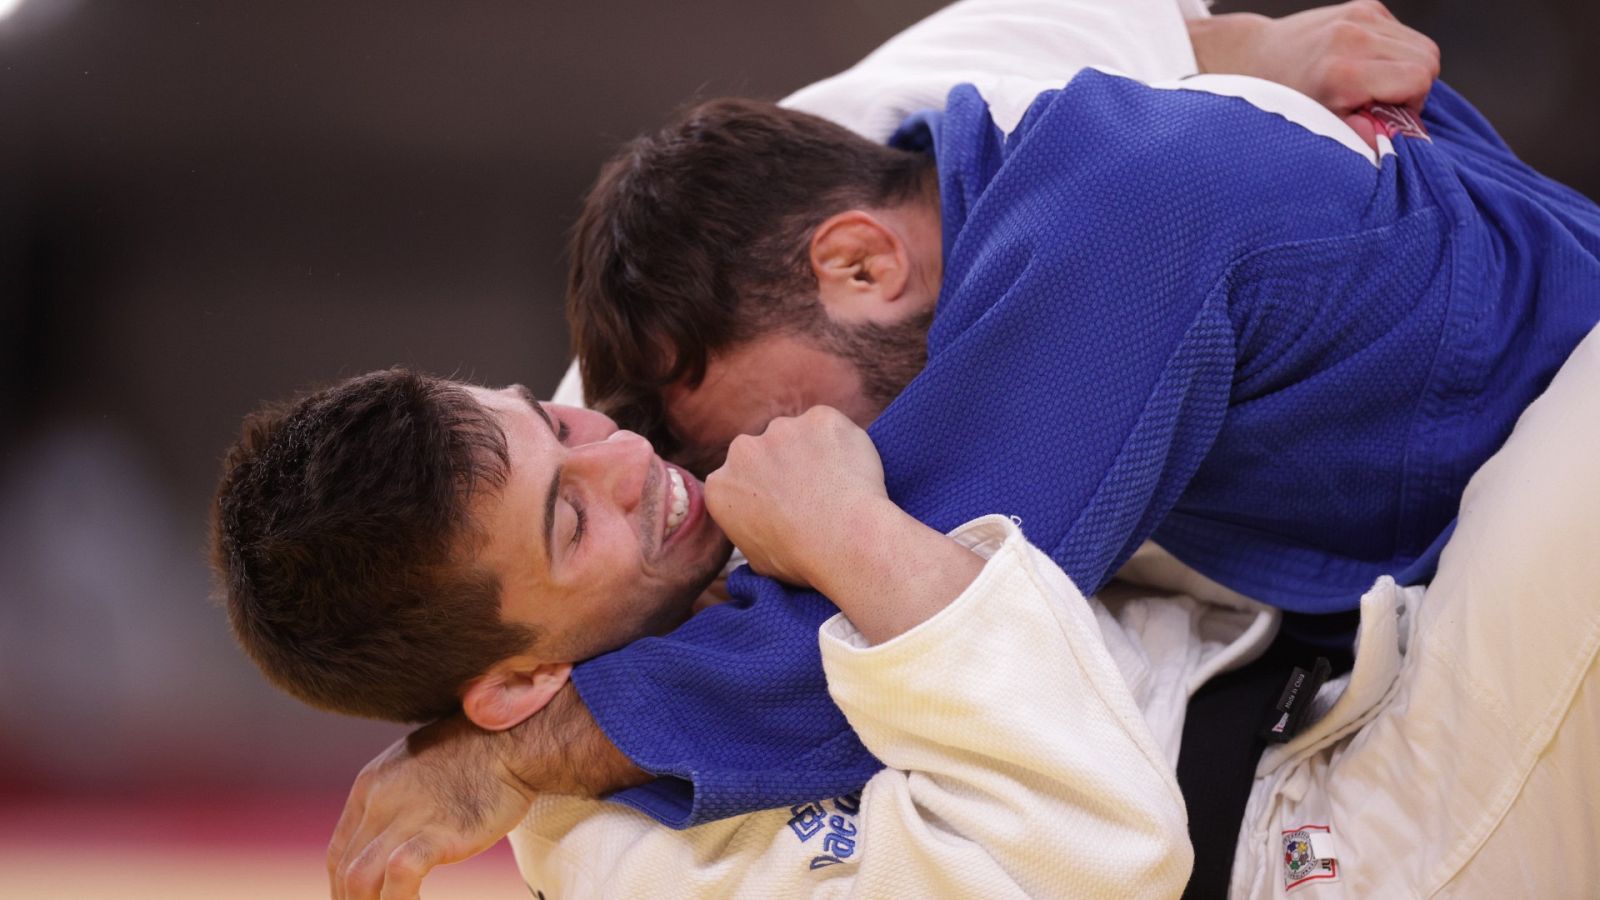 Resumen de la derrota del judoca español Fran Garrigós